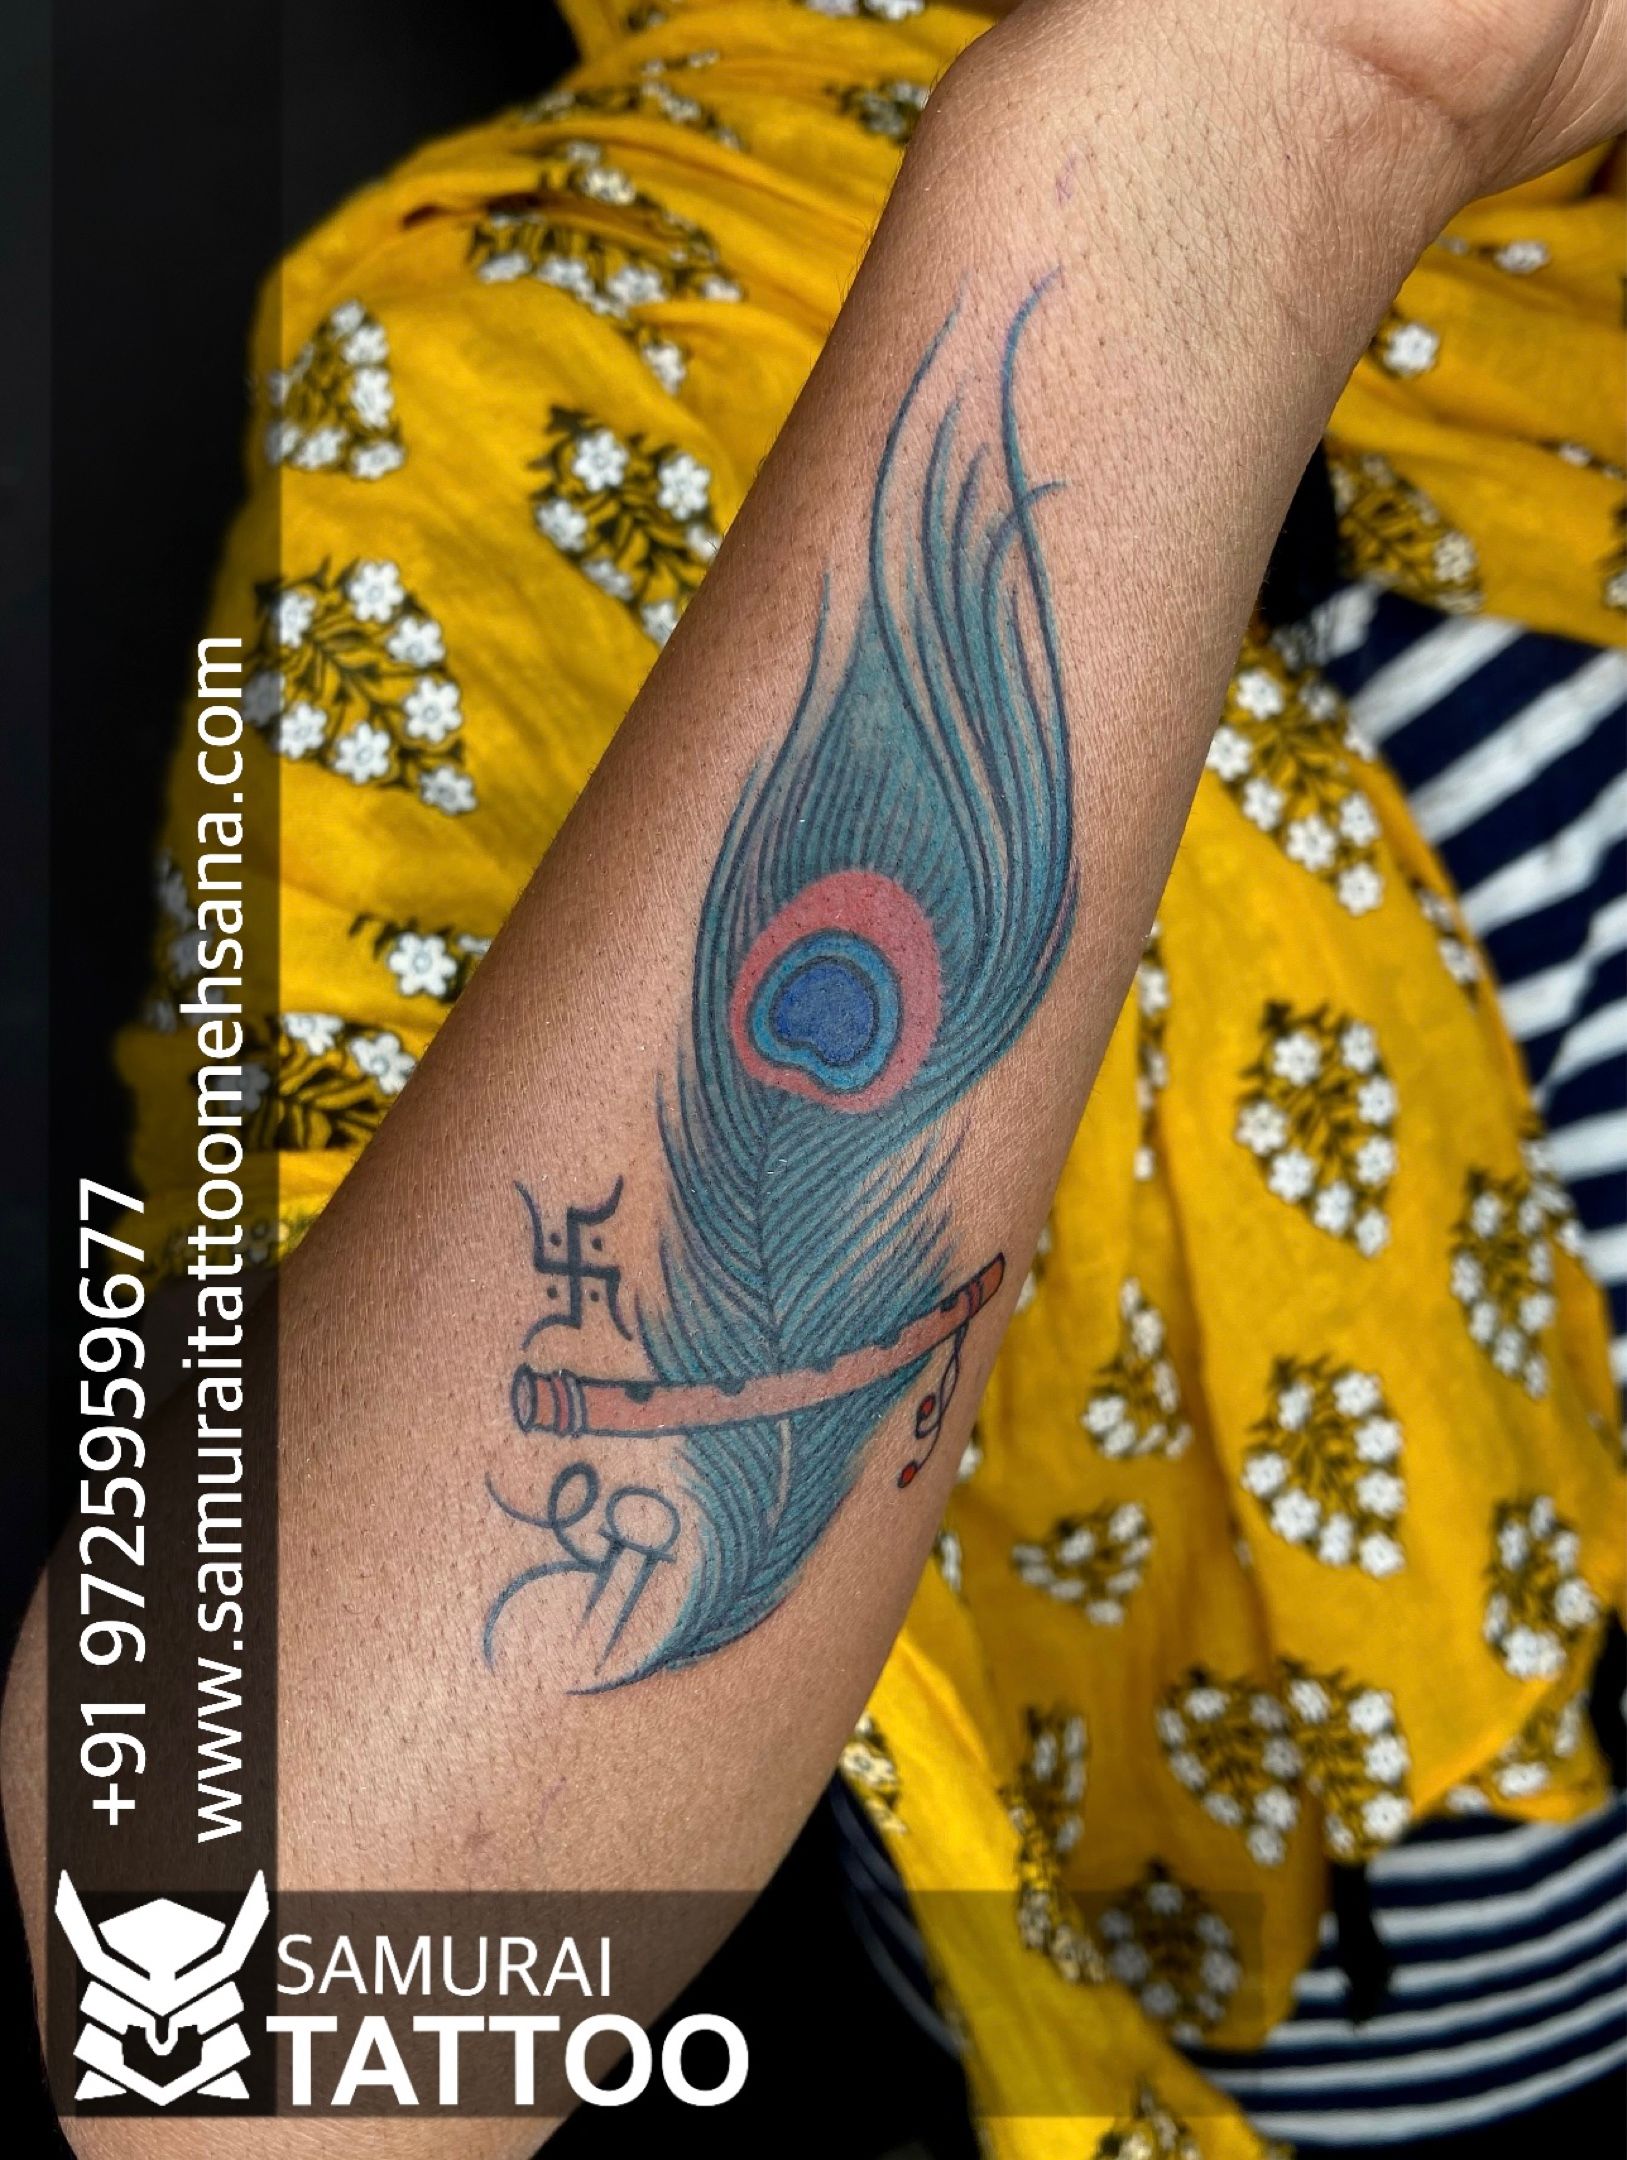 Temporary Tattoowala Morpankh Designs Tattoo Combo Waterproof Temporary  Body Tattoo Pack of 4